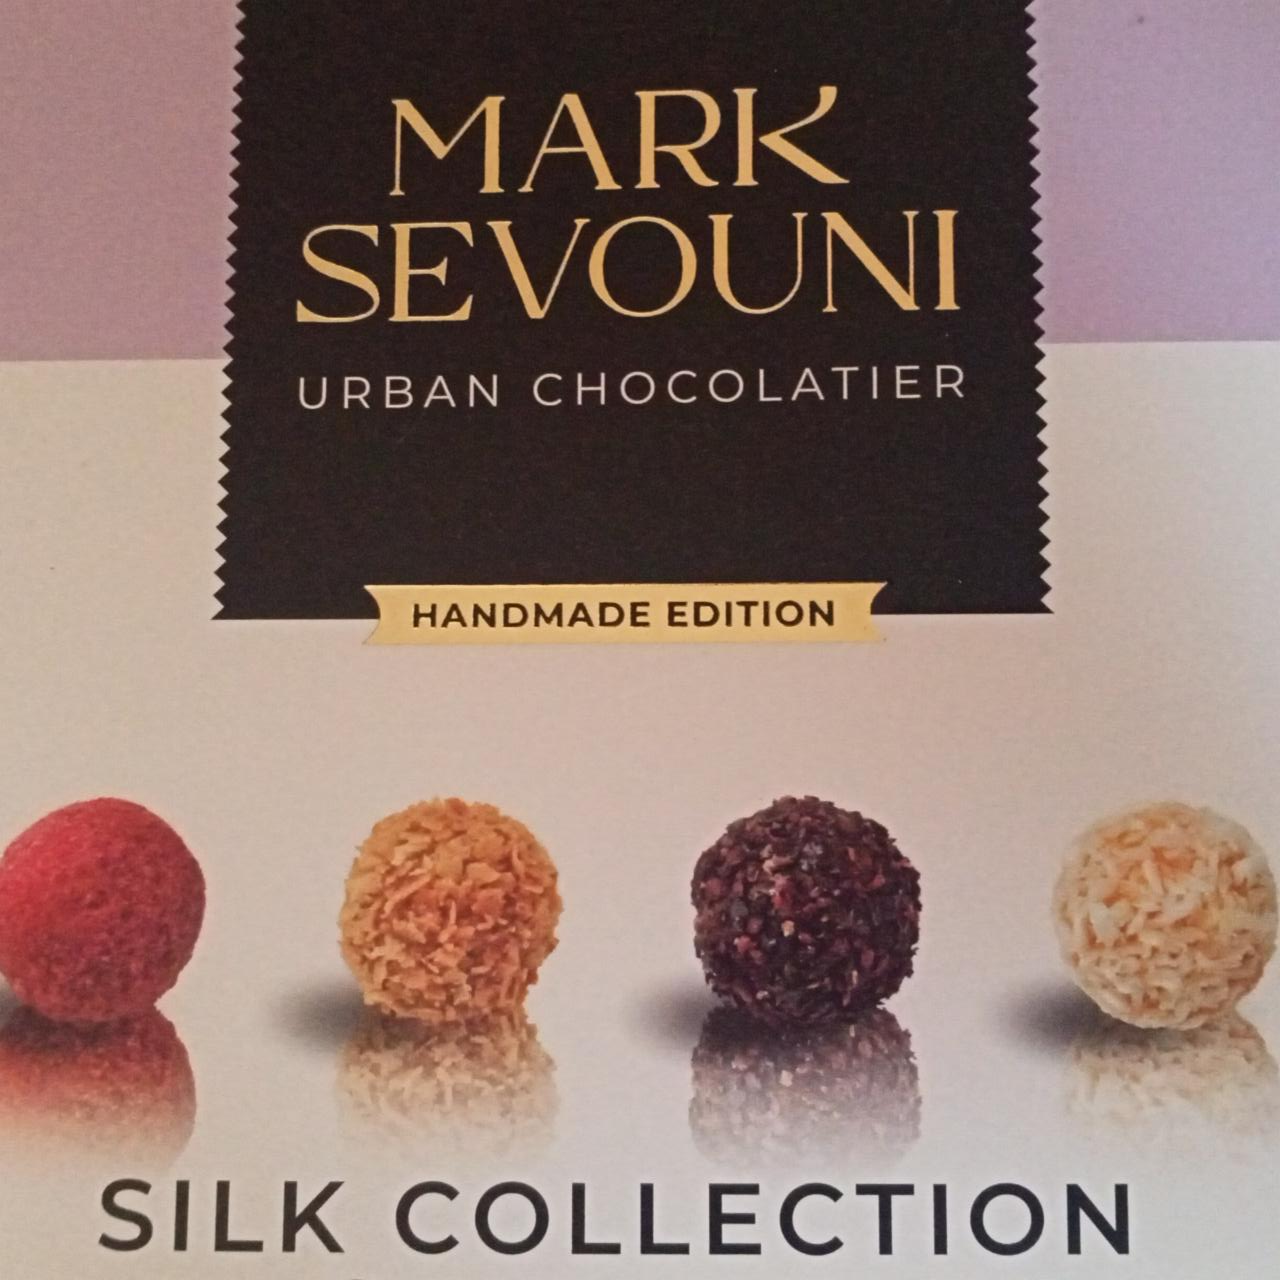 Фото - Конфеты silk collection Urban chocolatier Mark Sevouni